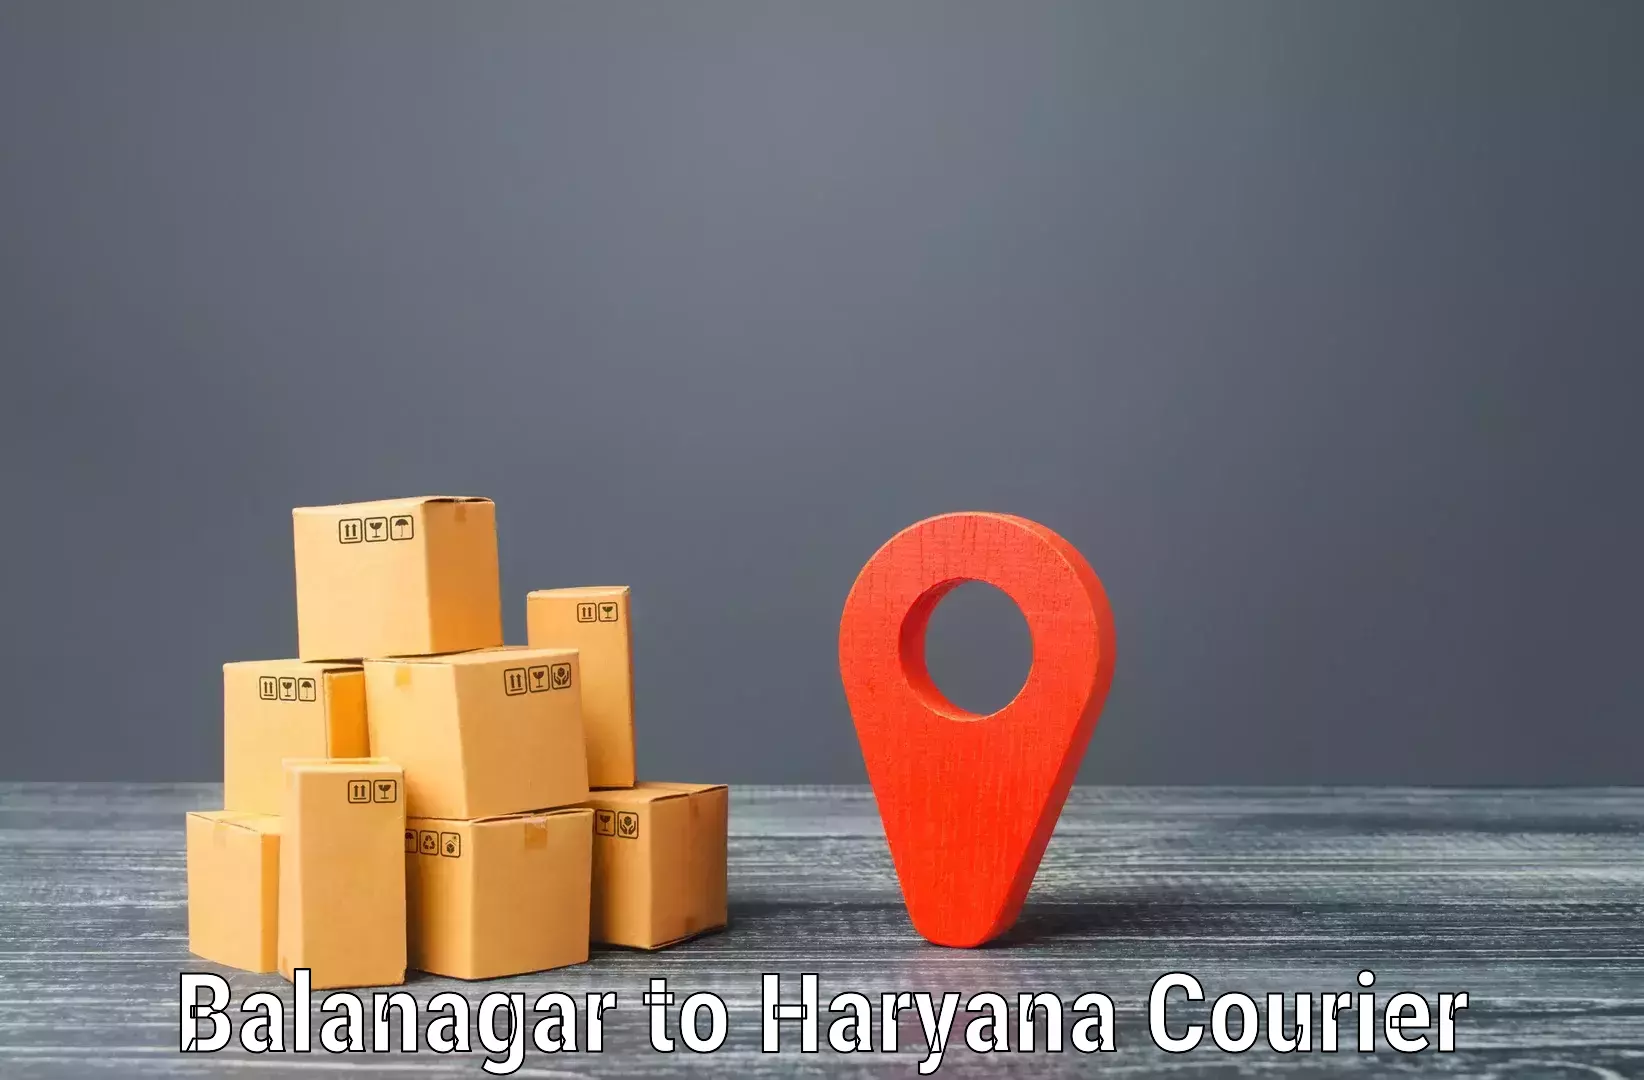 Bulk shipment Balanagar to Odhan